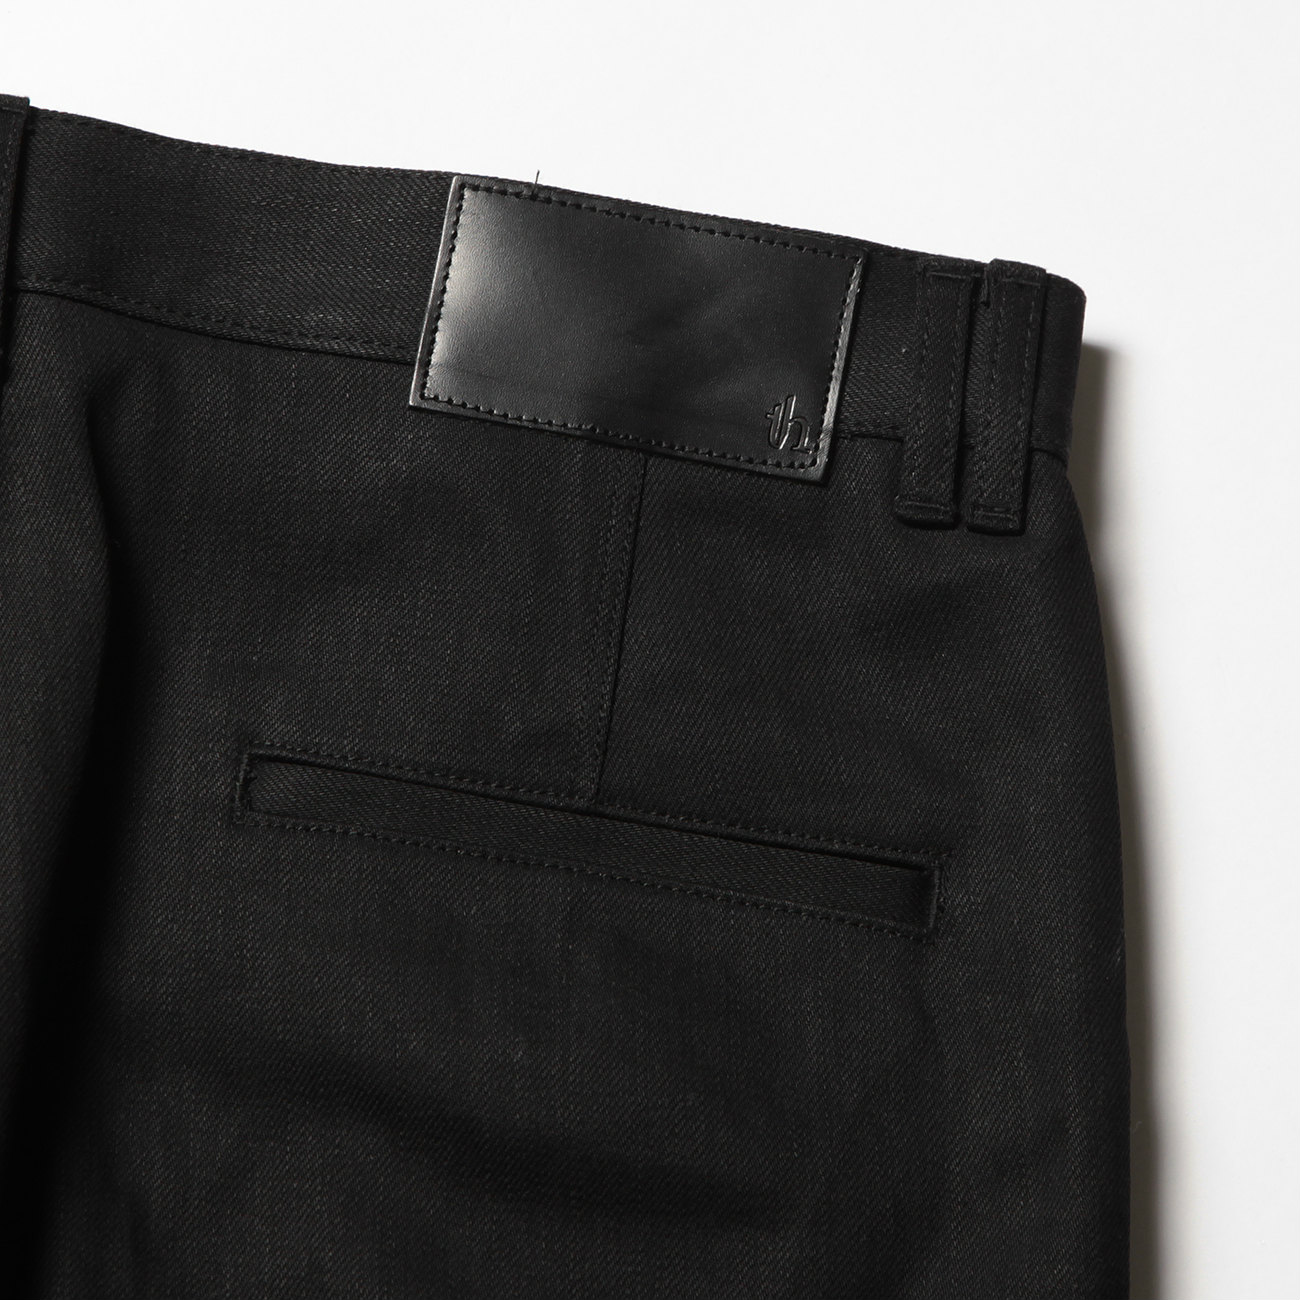 ANISH / Semi-Wide Tailored Pants - Black